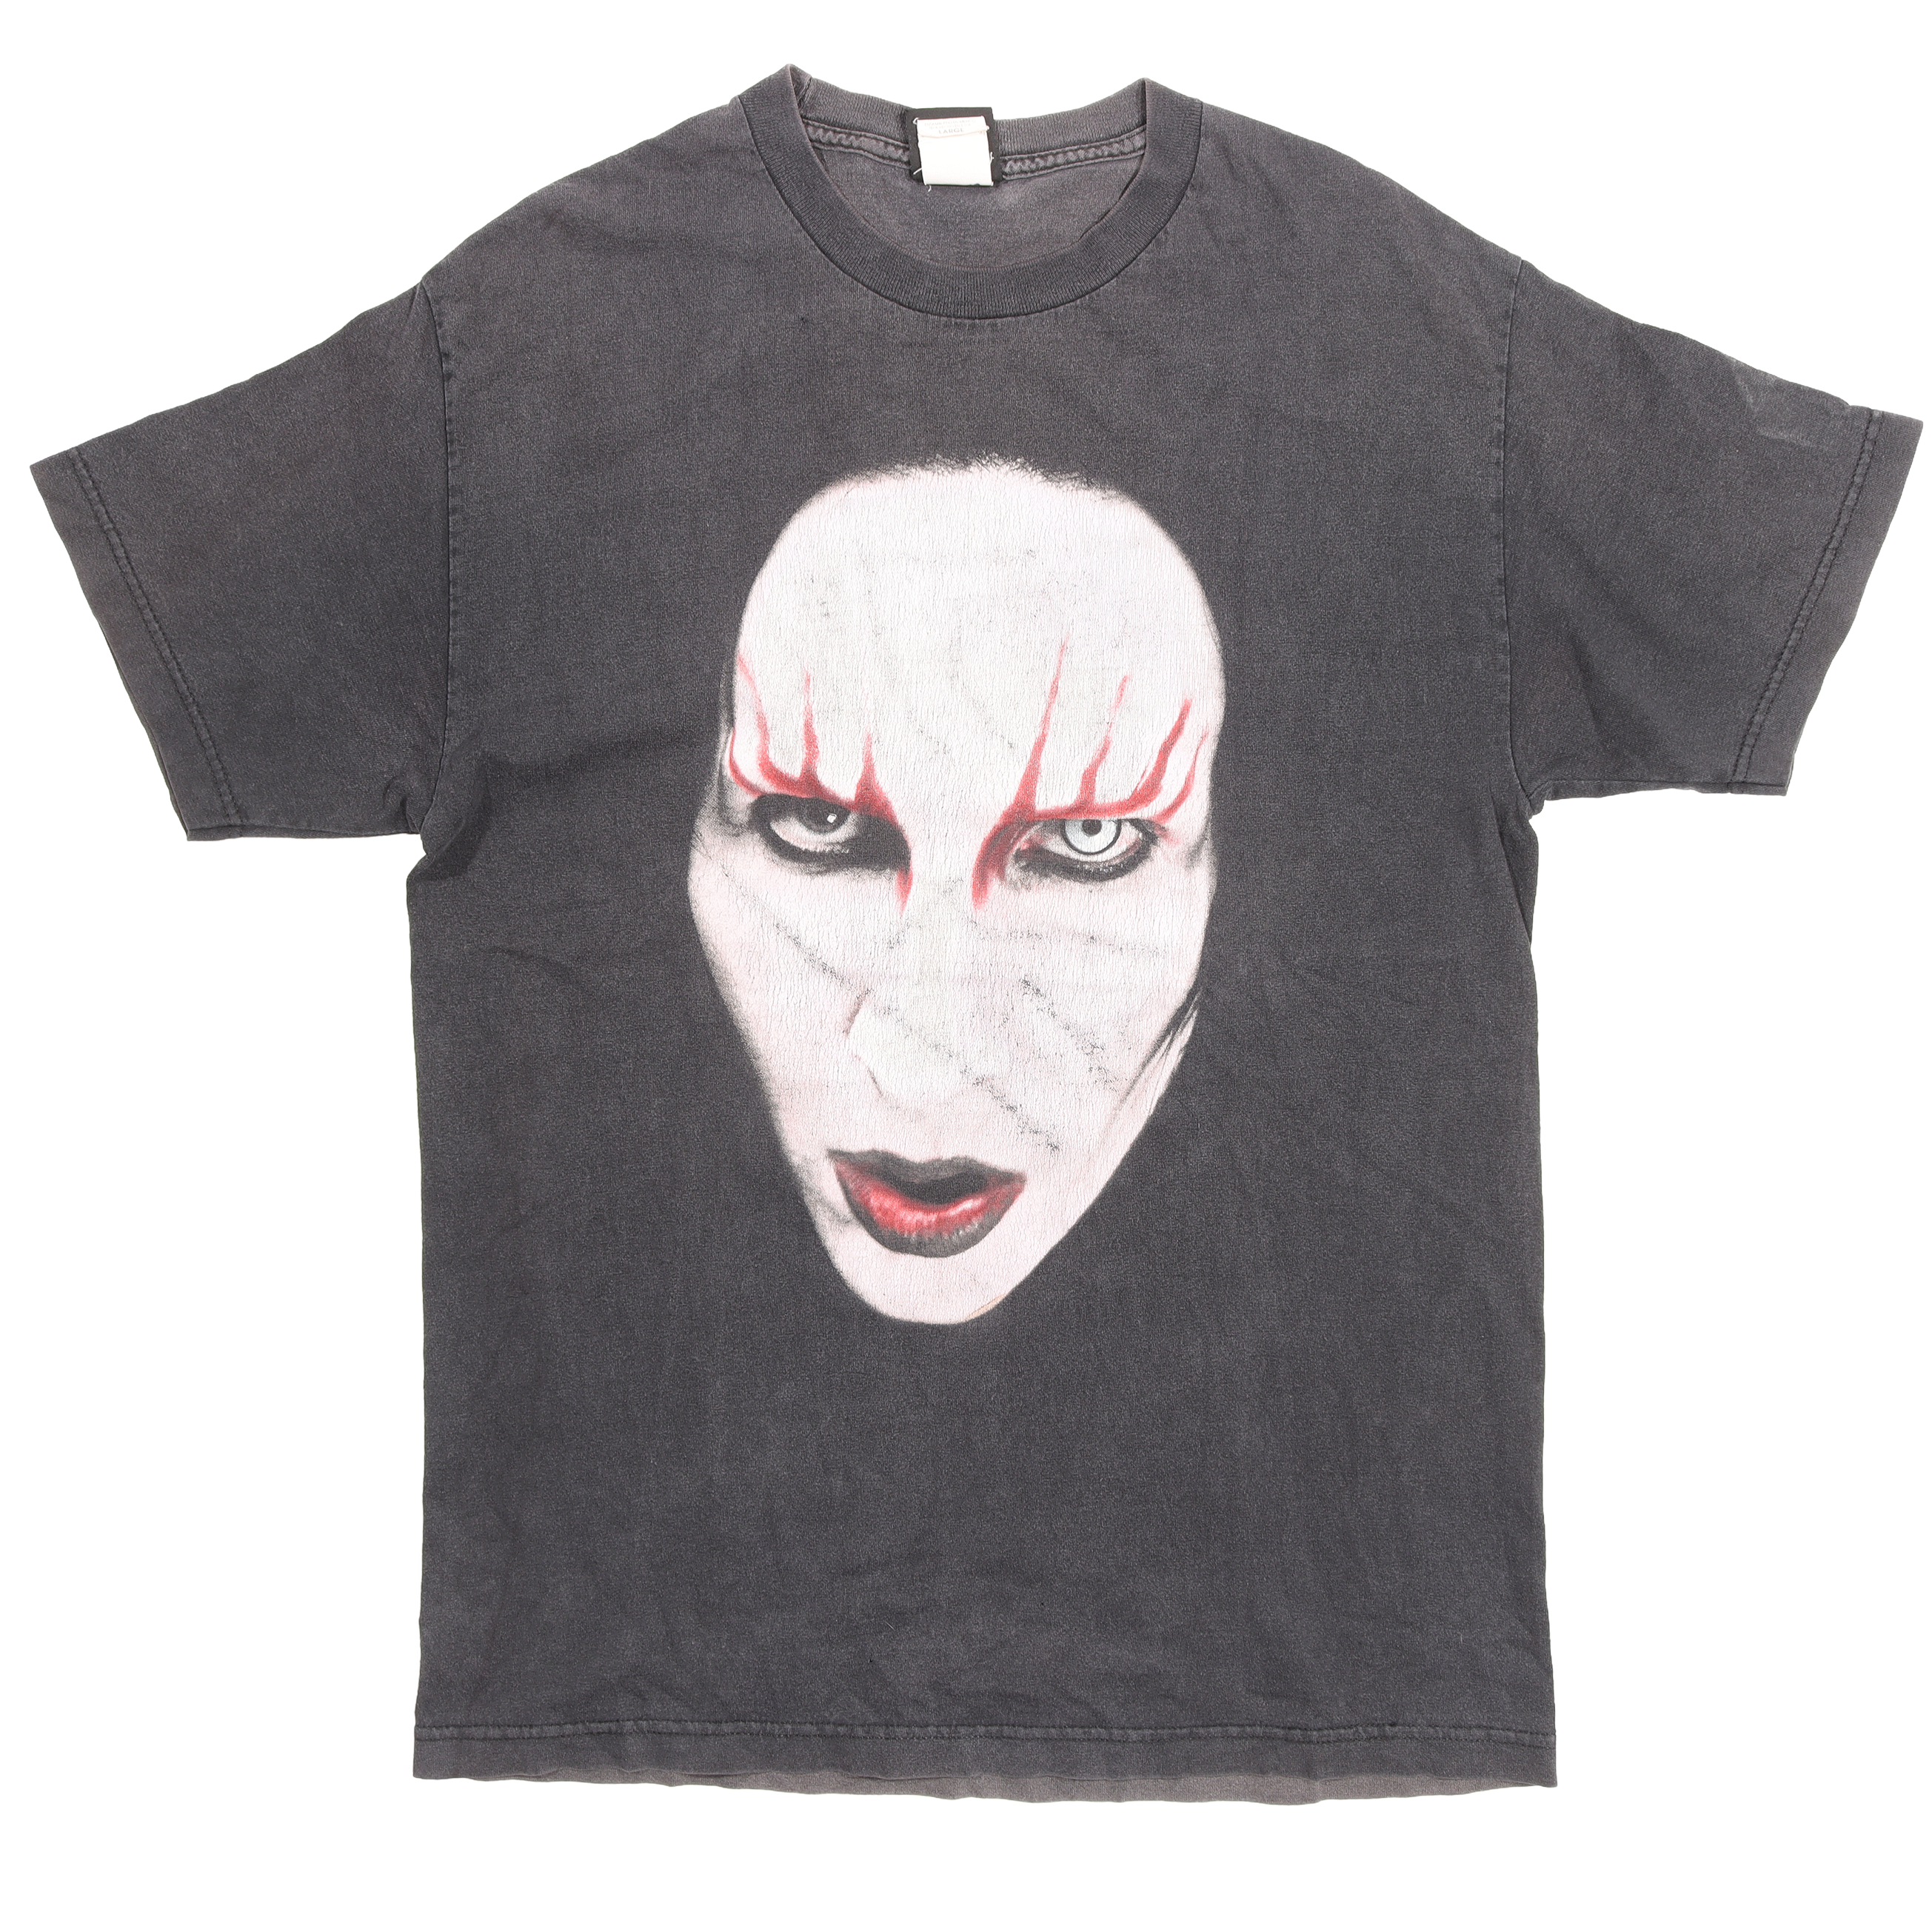 Marilyn Manson Portrait T-Shirt